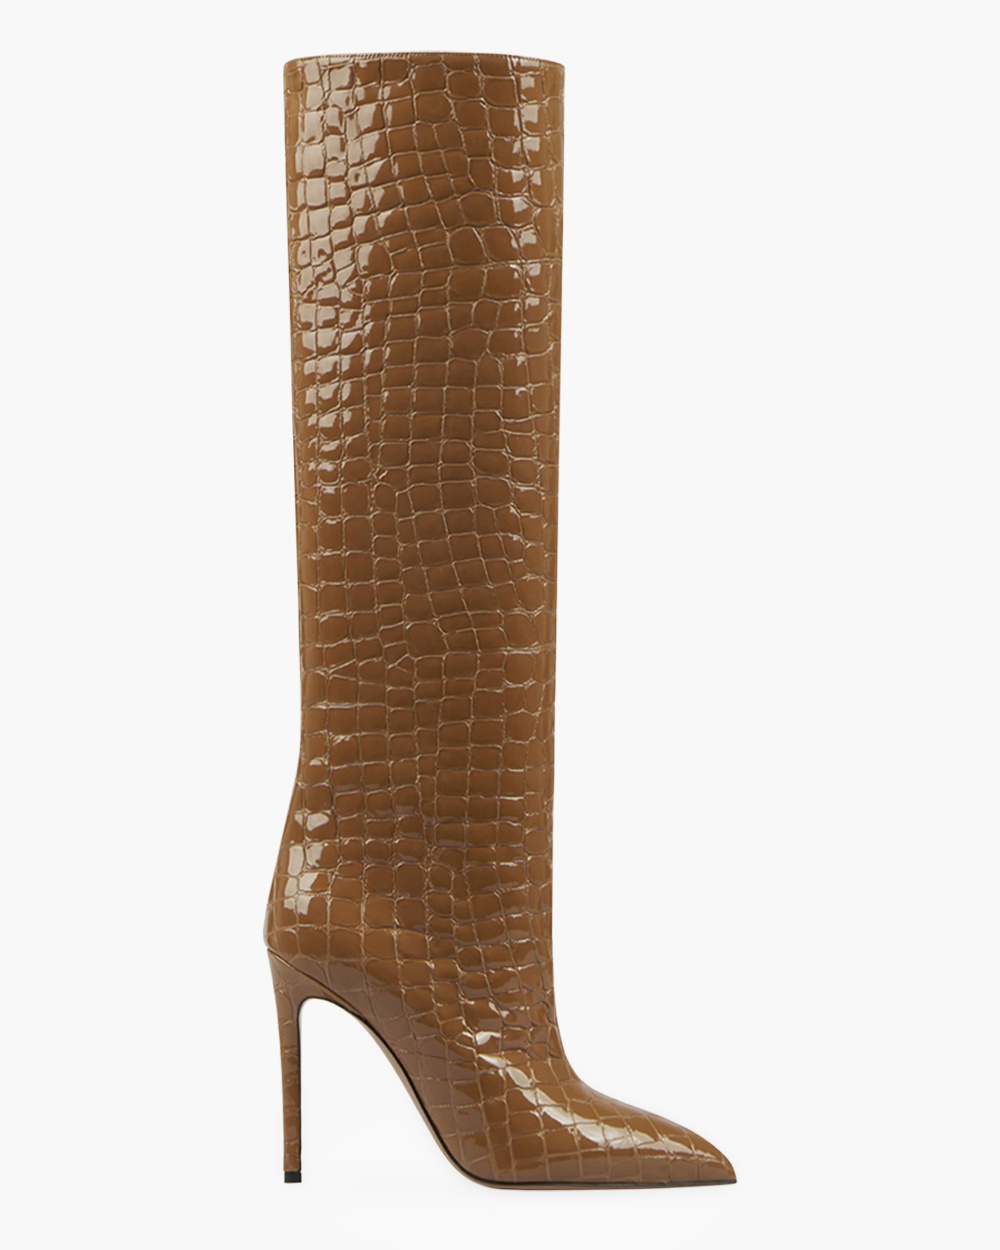 Stiletto boot in glossy croc-effect tan